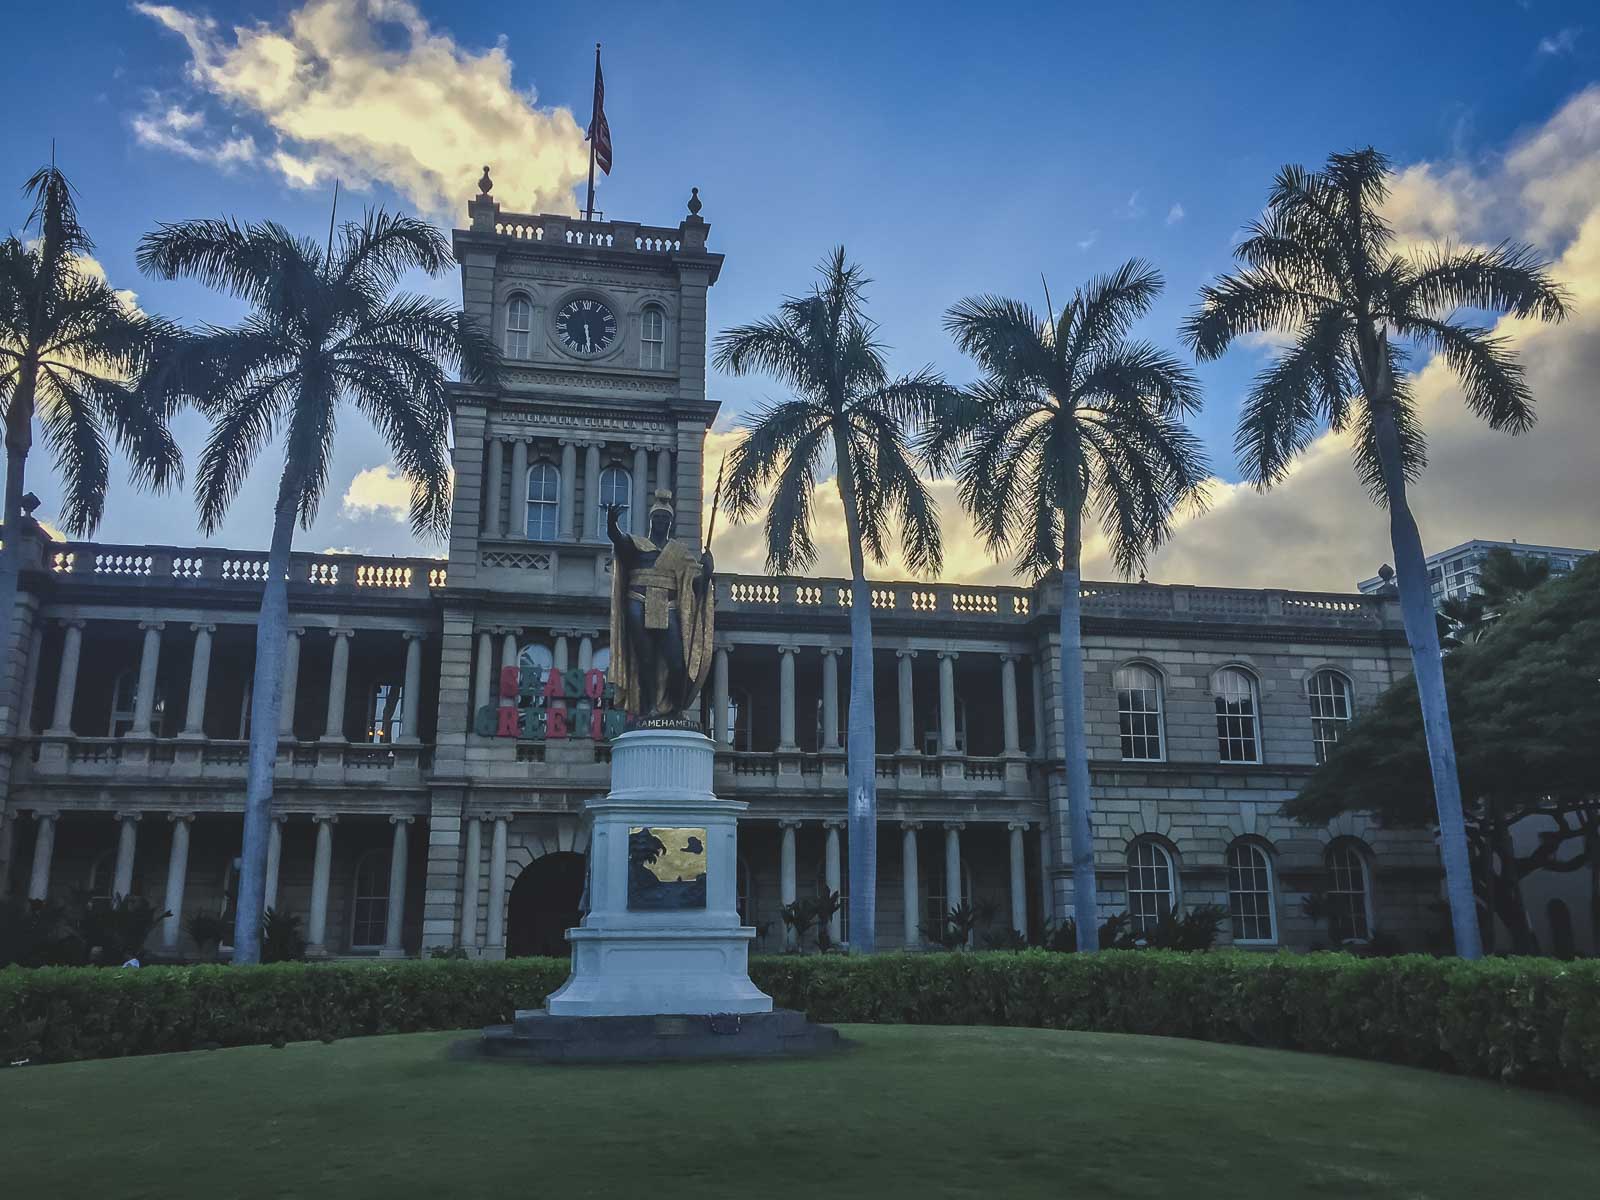 Hawaii's Royal Palace in Oahu